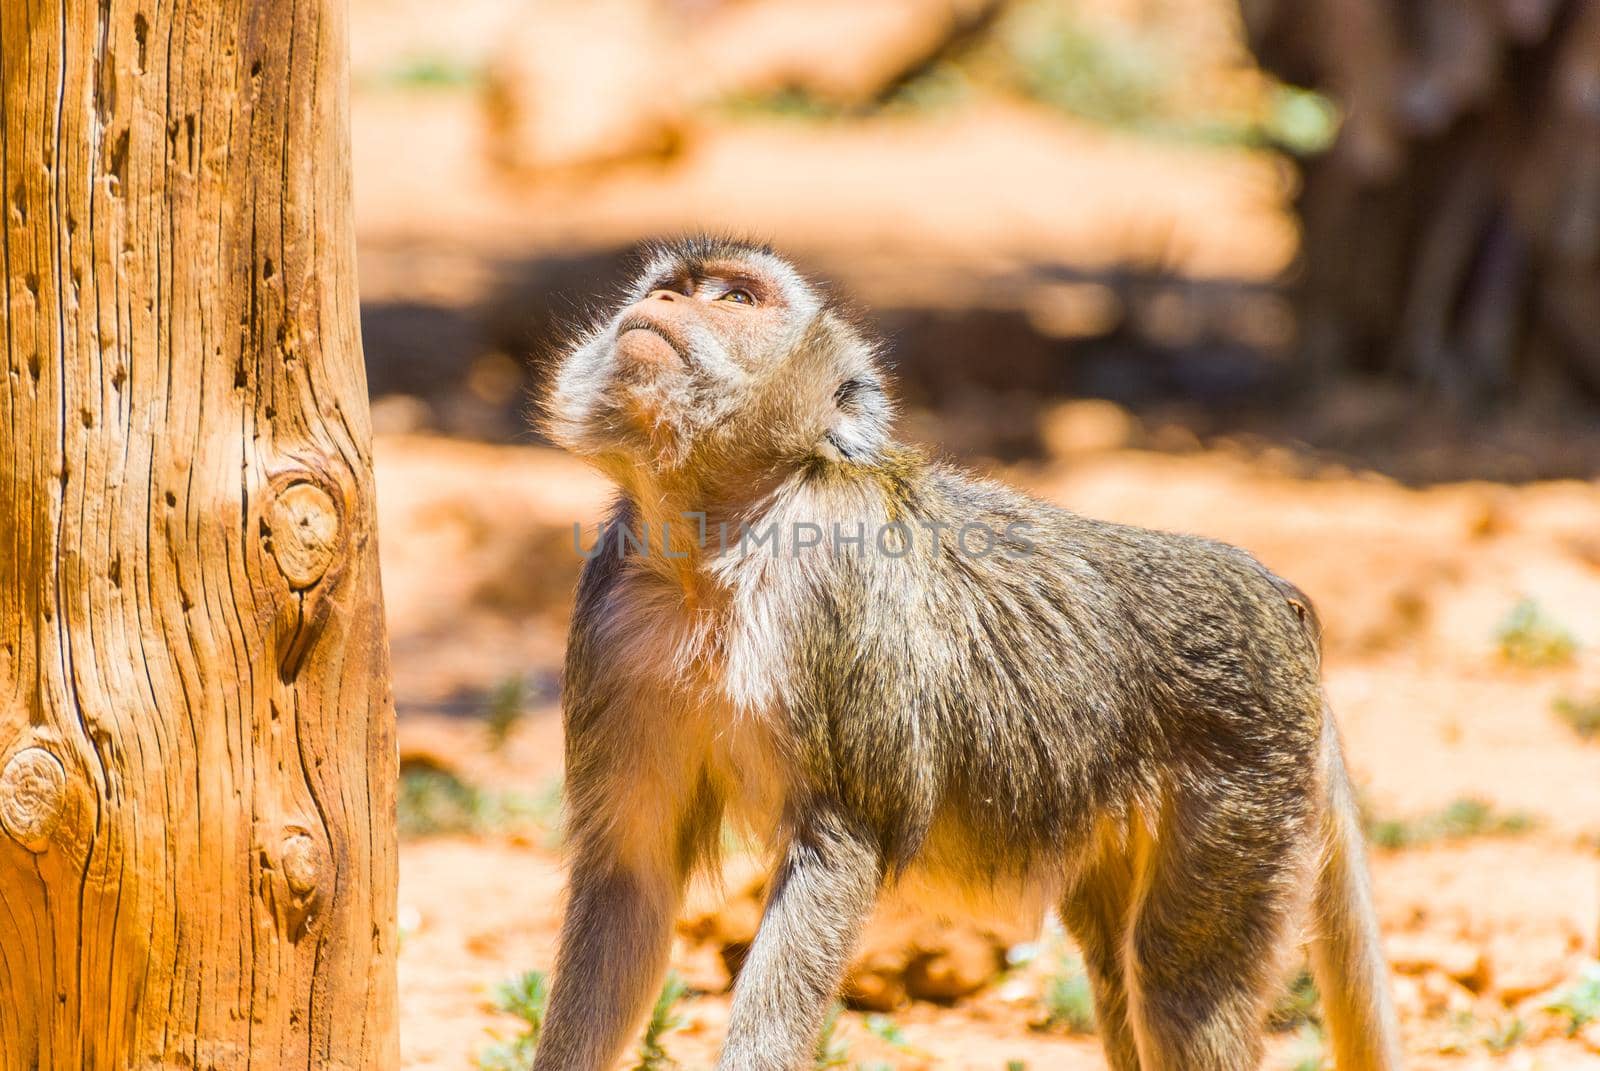 Little Monkey, Sa Coma, Mallorca by bildgigant